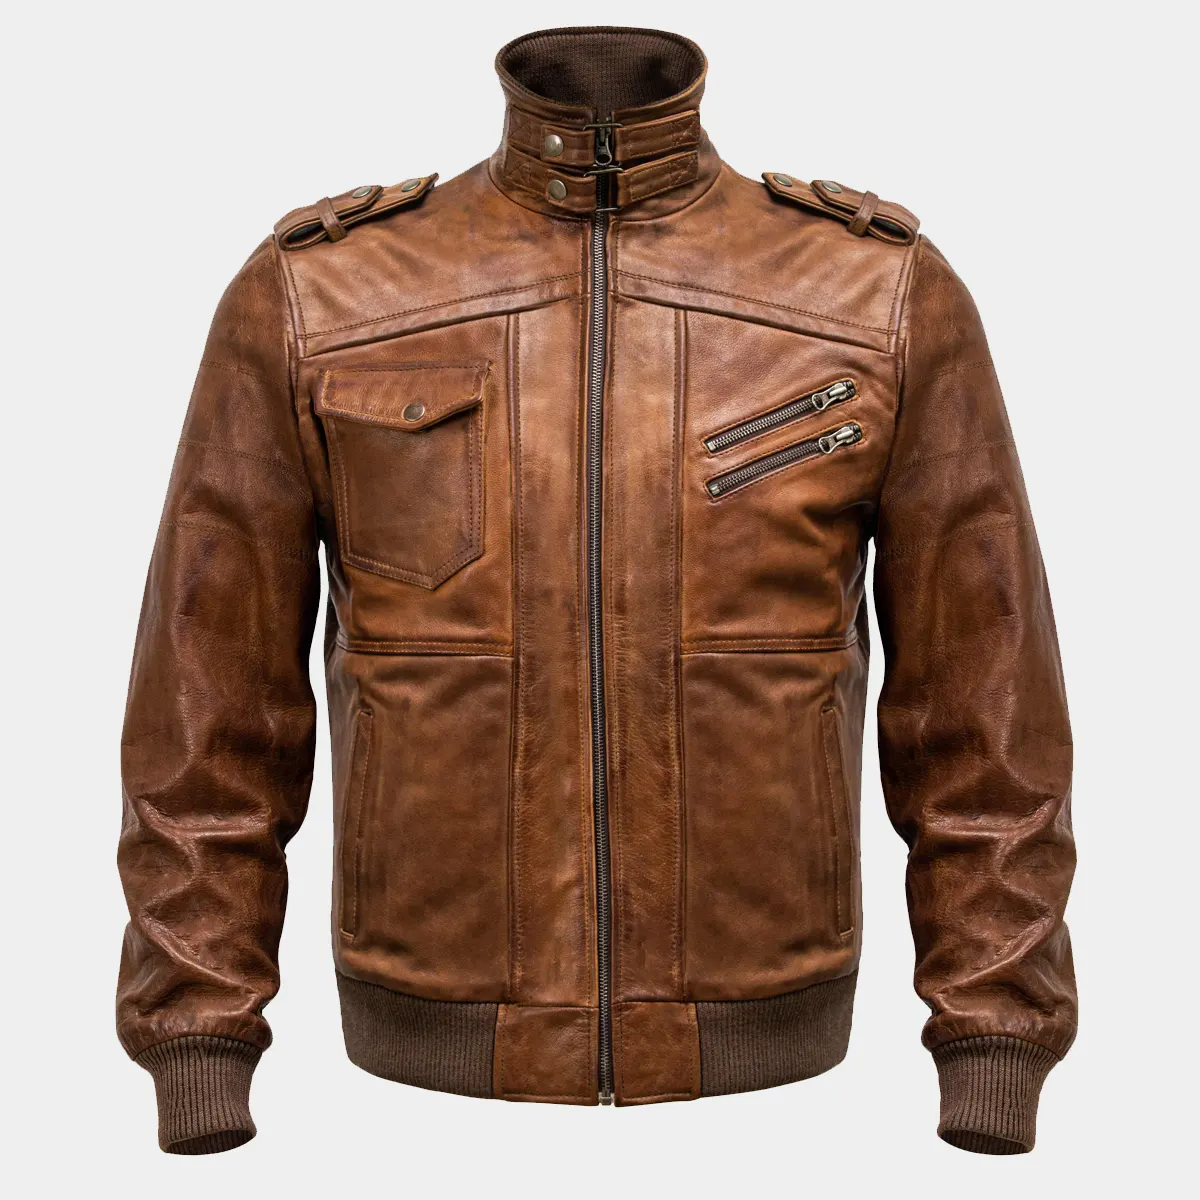 leather jackets edinburgh